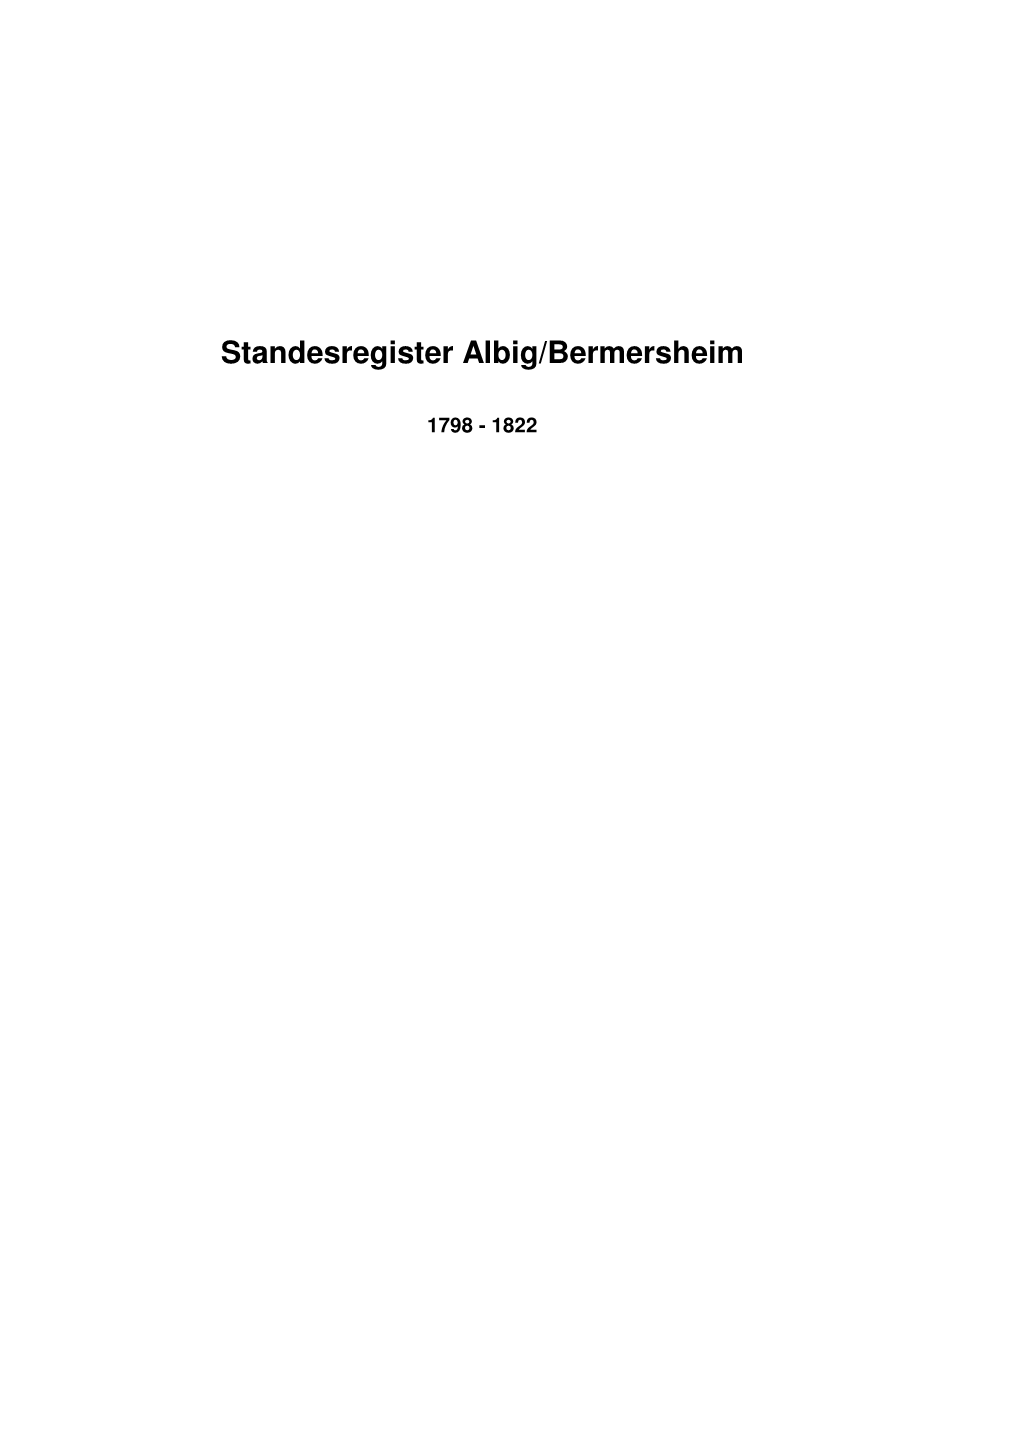 Standesregister Albig/ Bermersheim